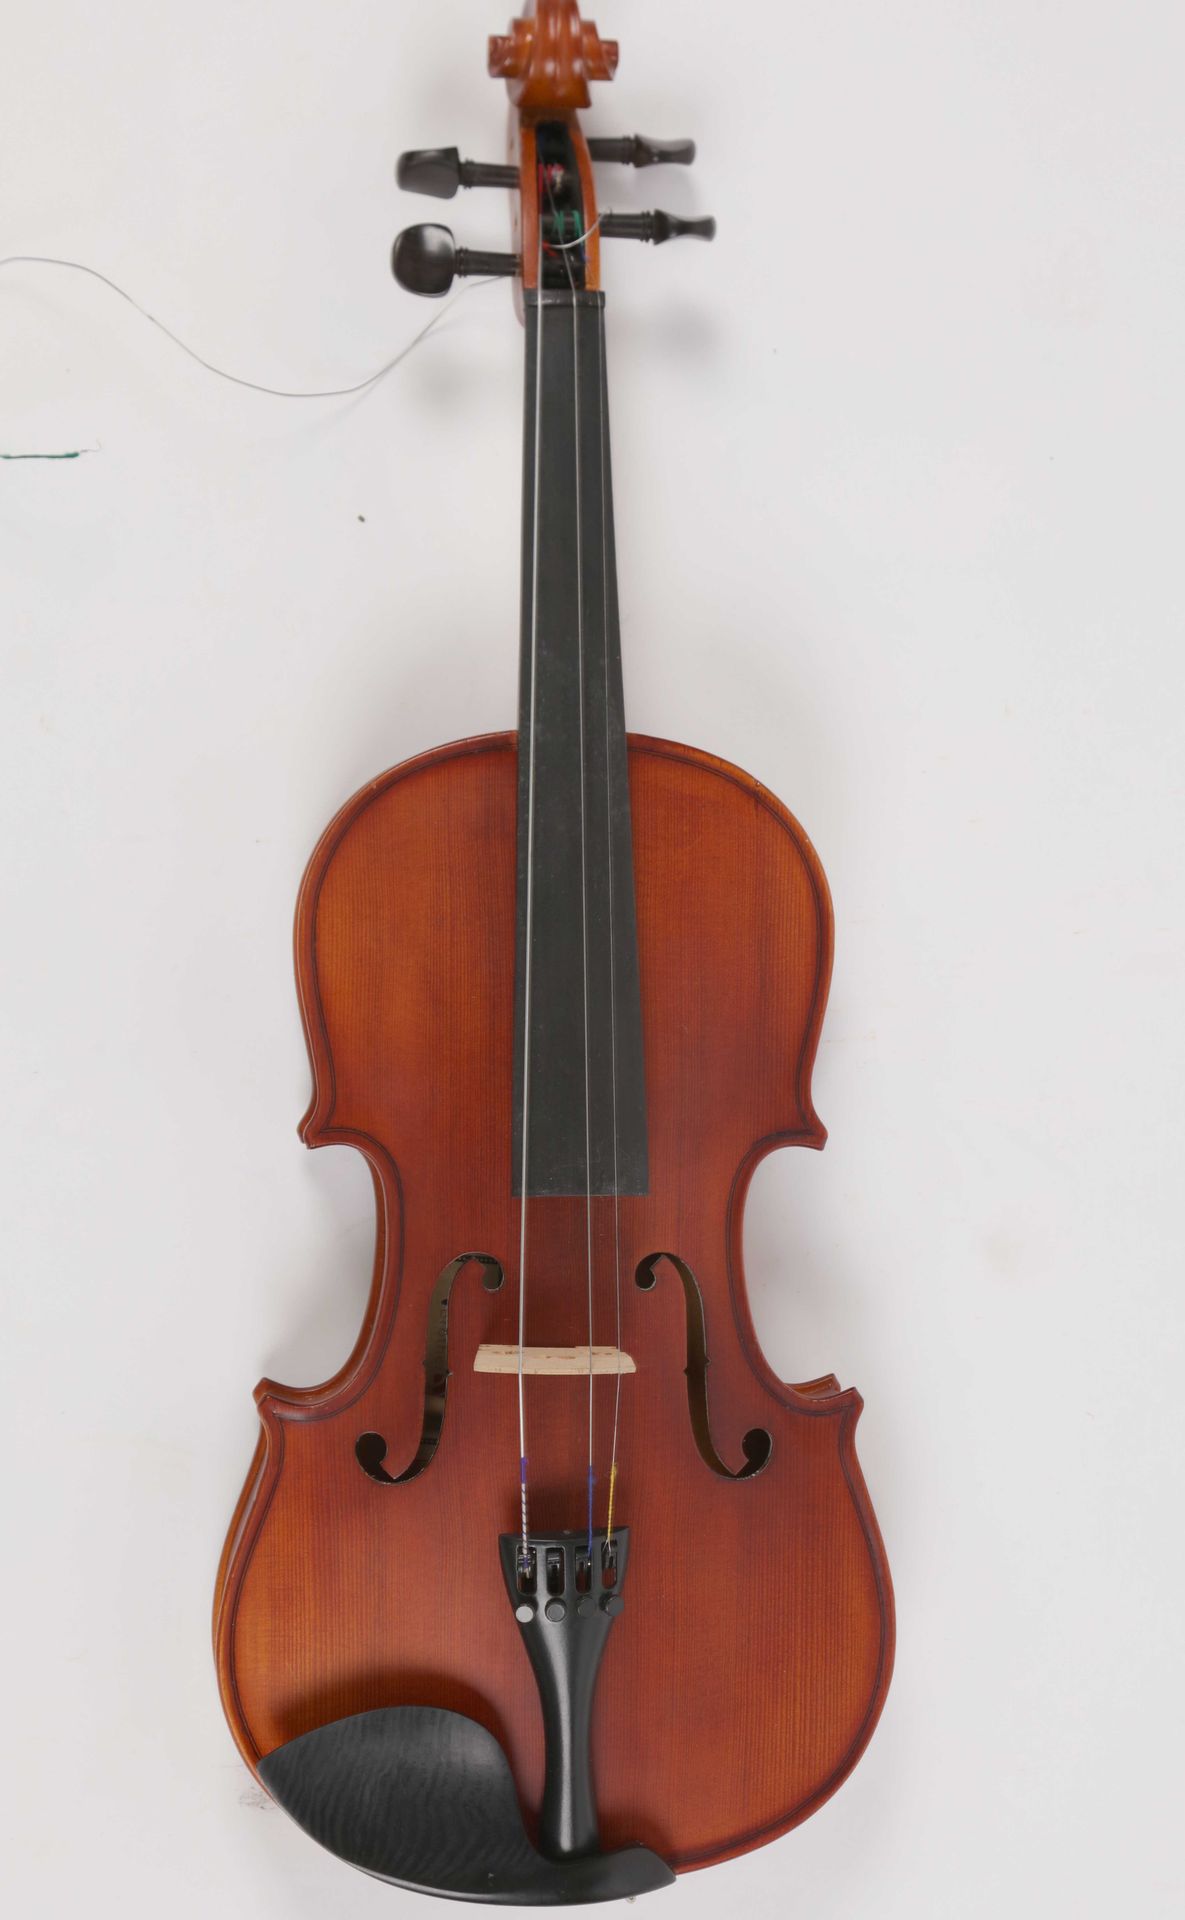 Null Violine, Länge : 58 cm. Bogen, lg : 74 cm. (ref : 257/28)